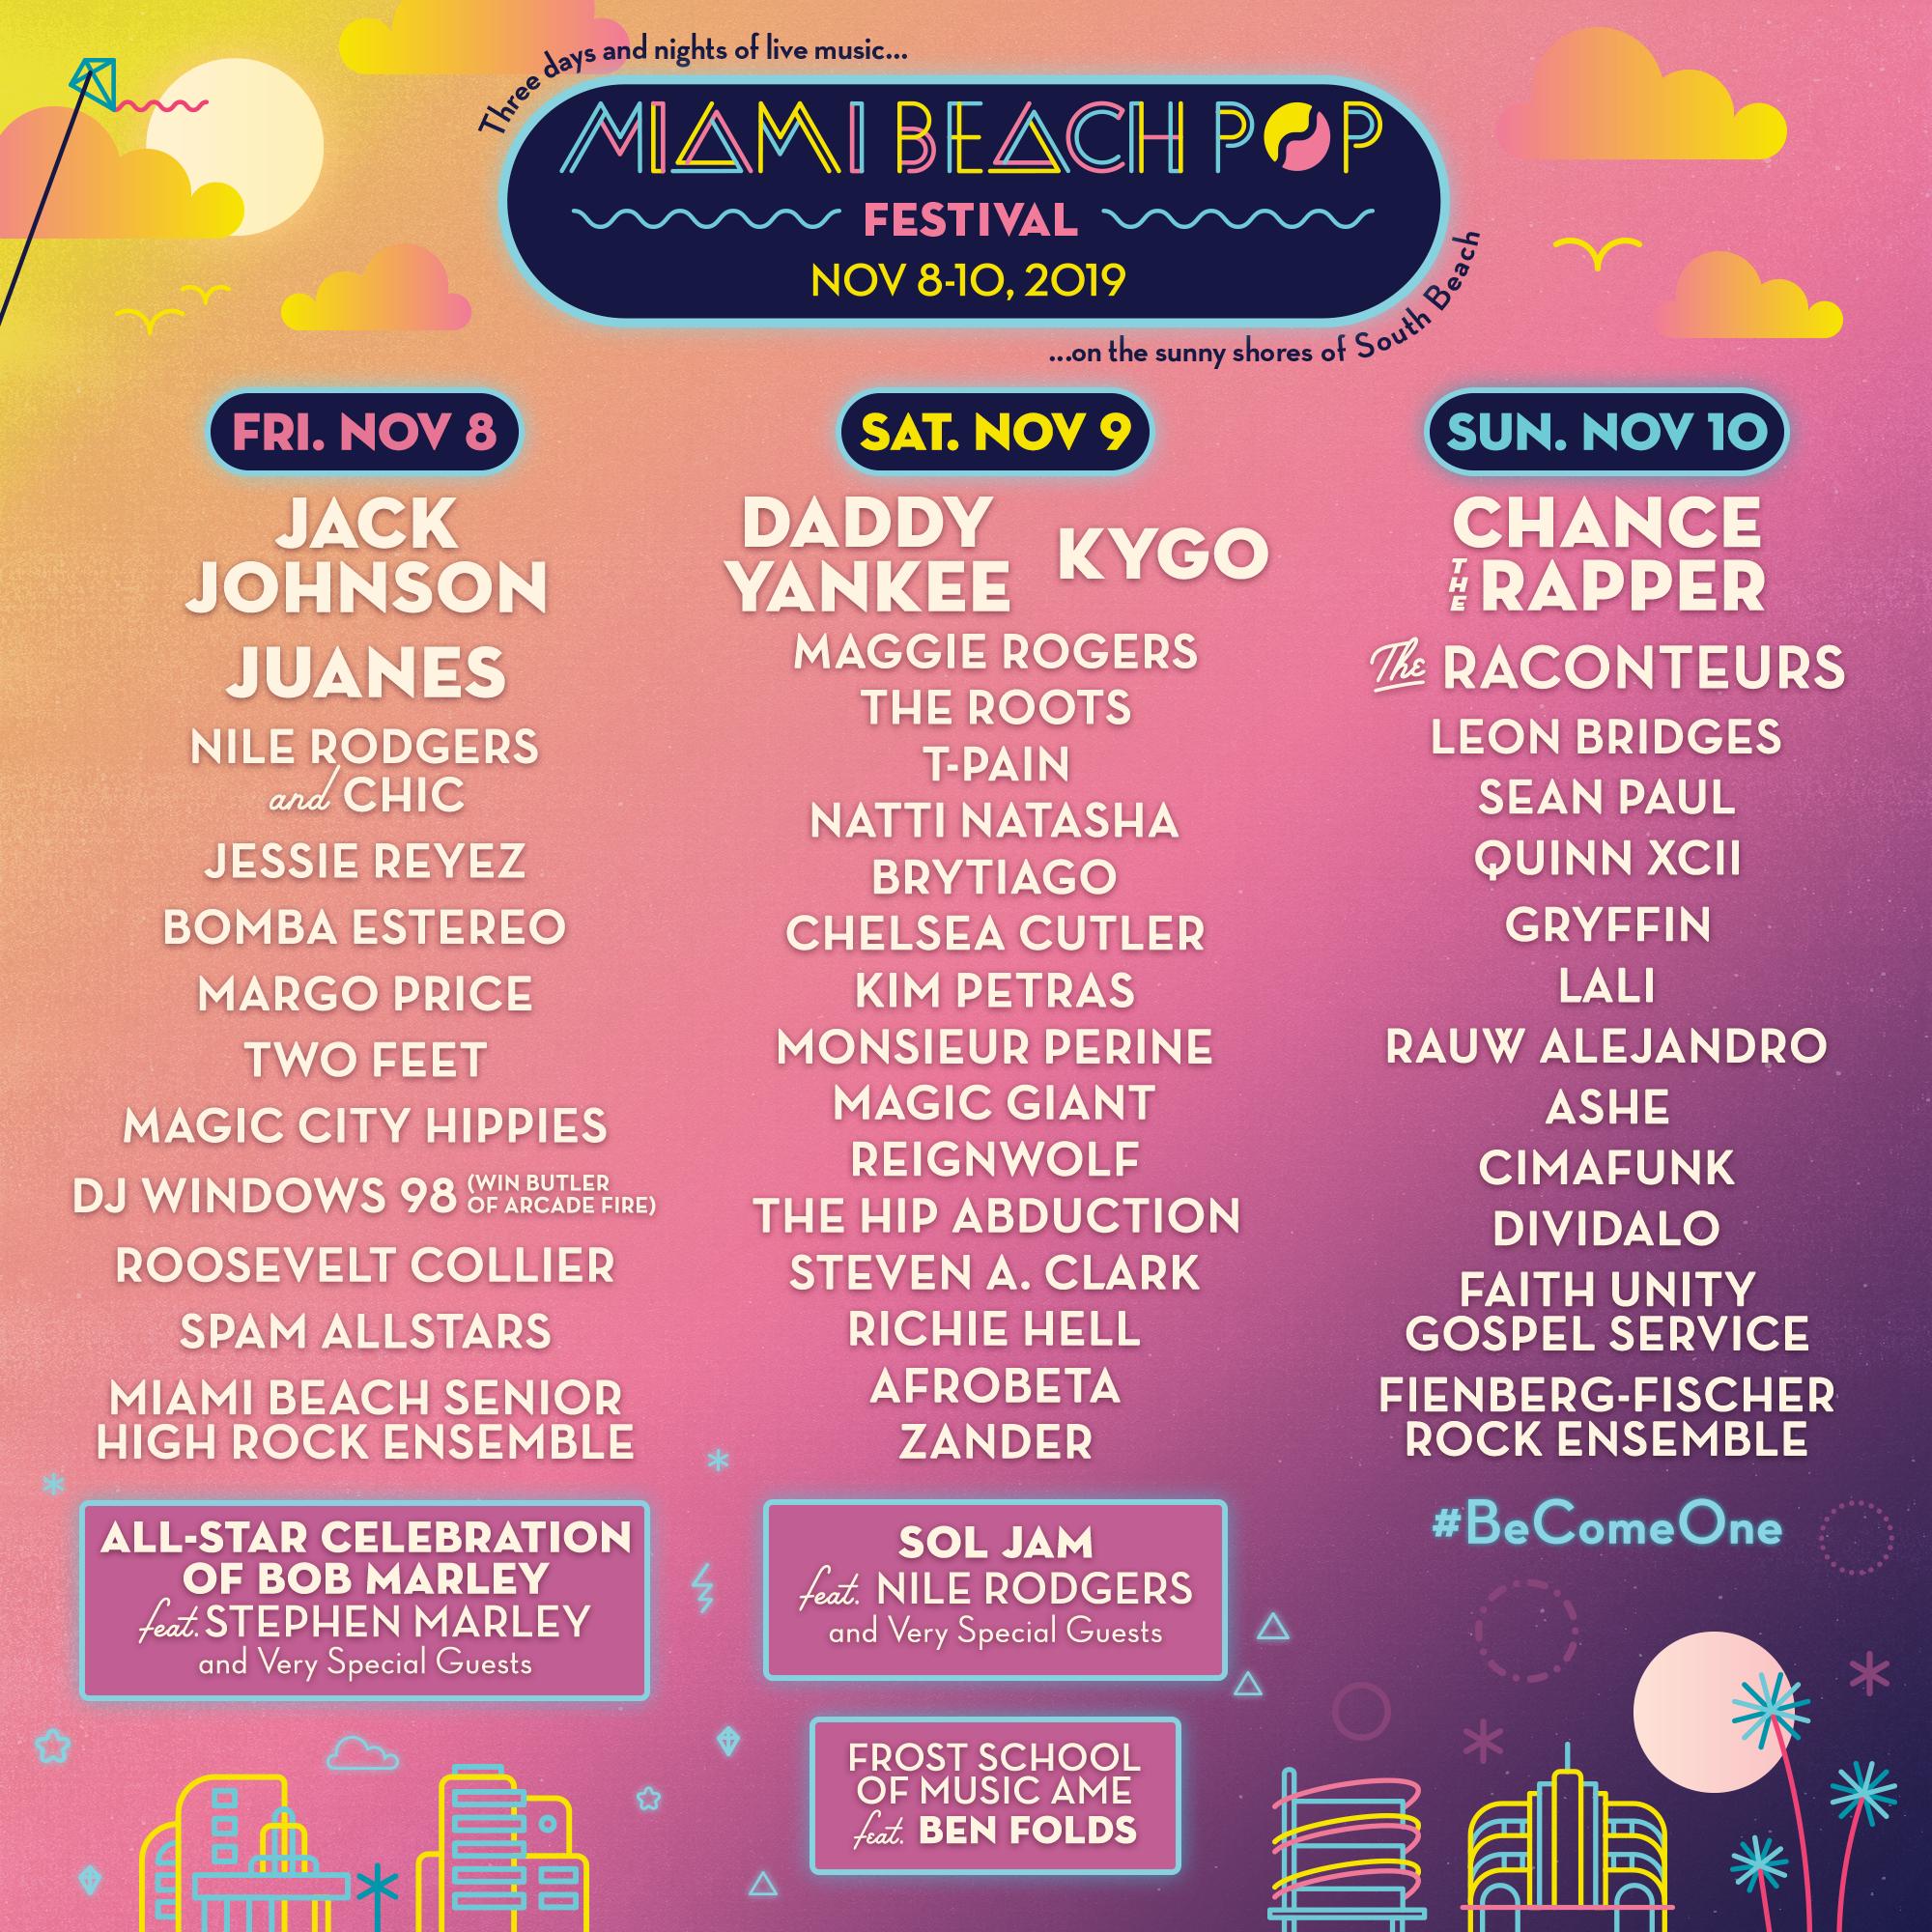 Miami Beach Pop Festival 2019